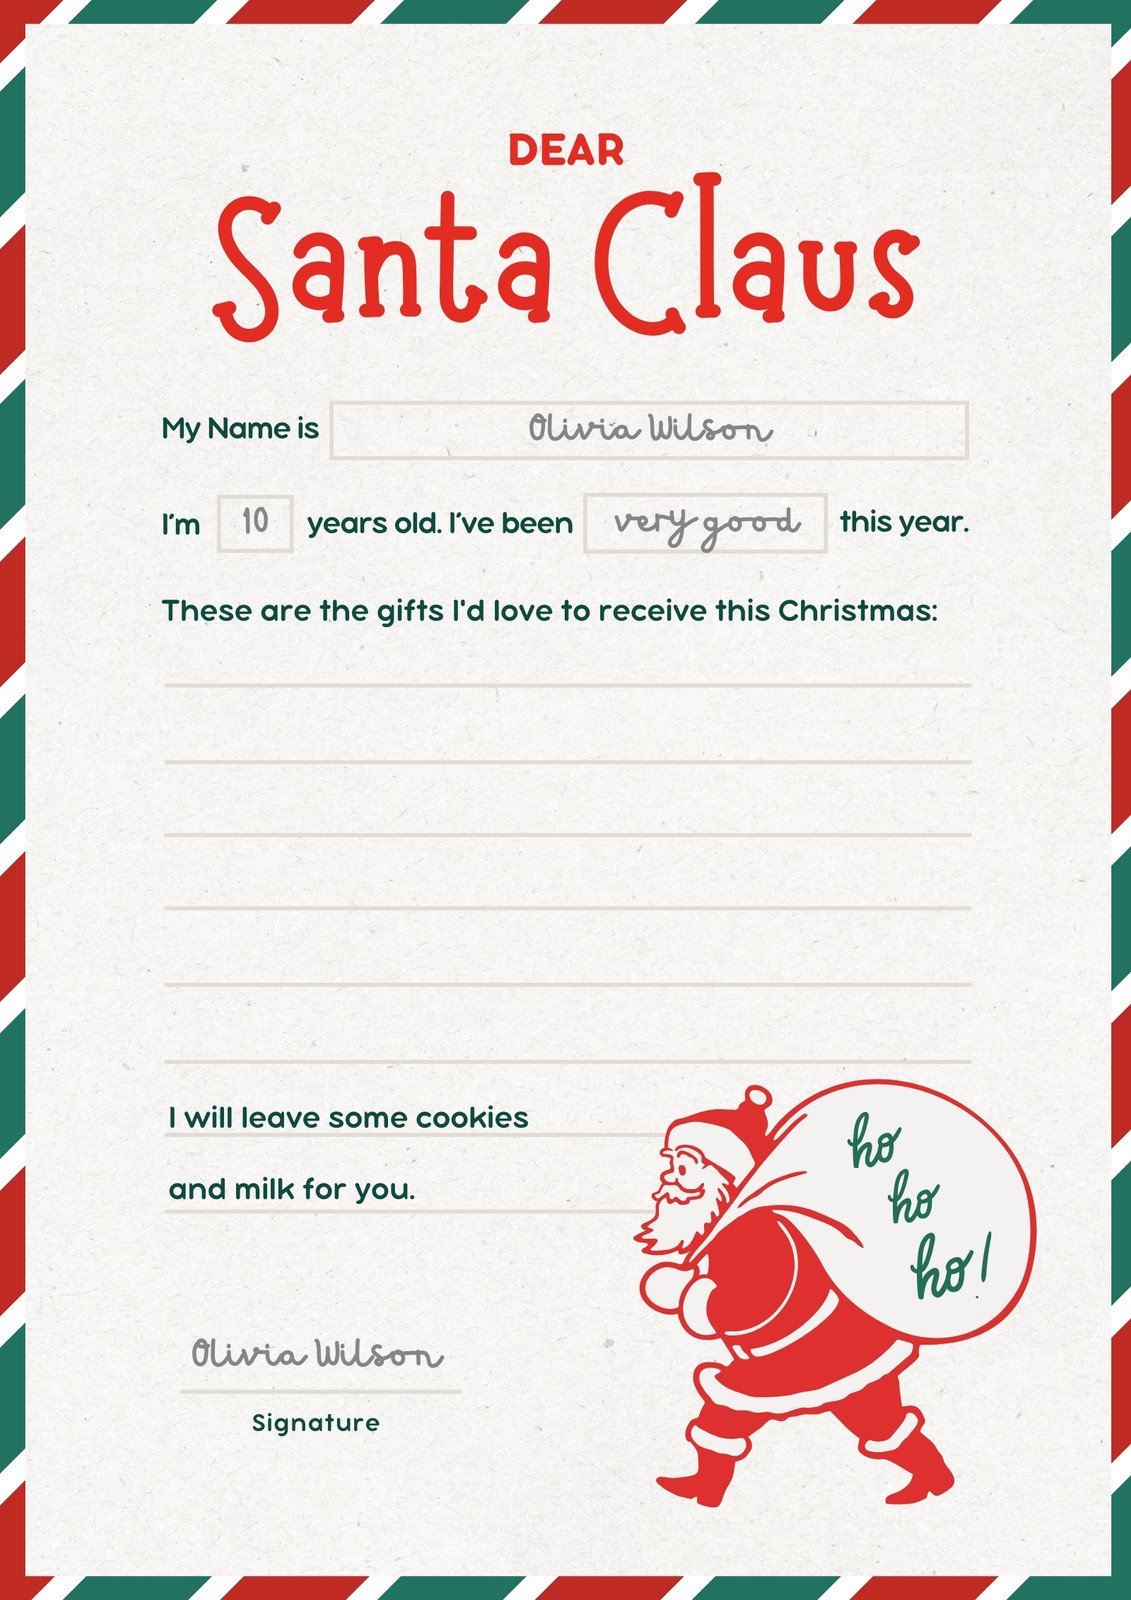 dear santa letterhead